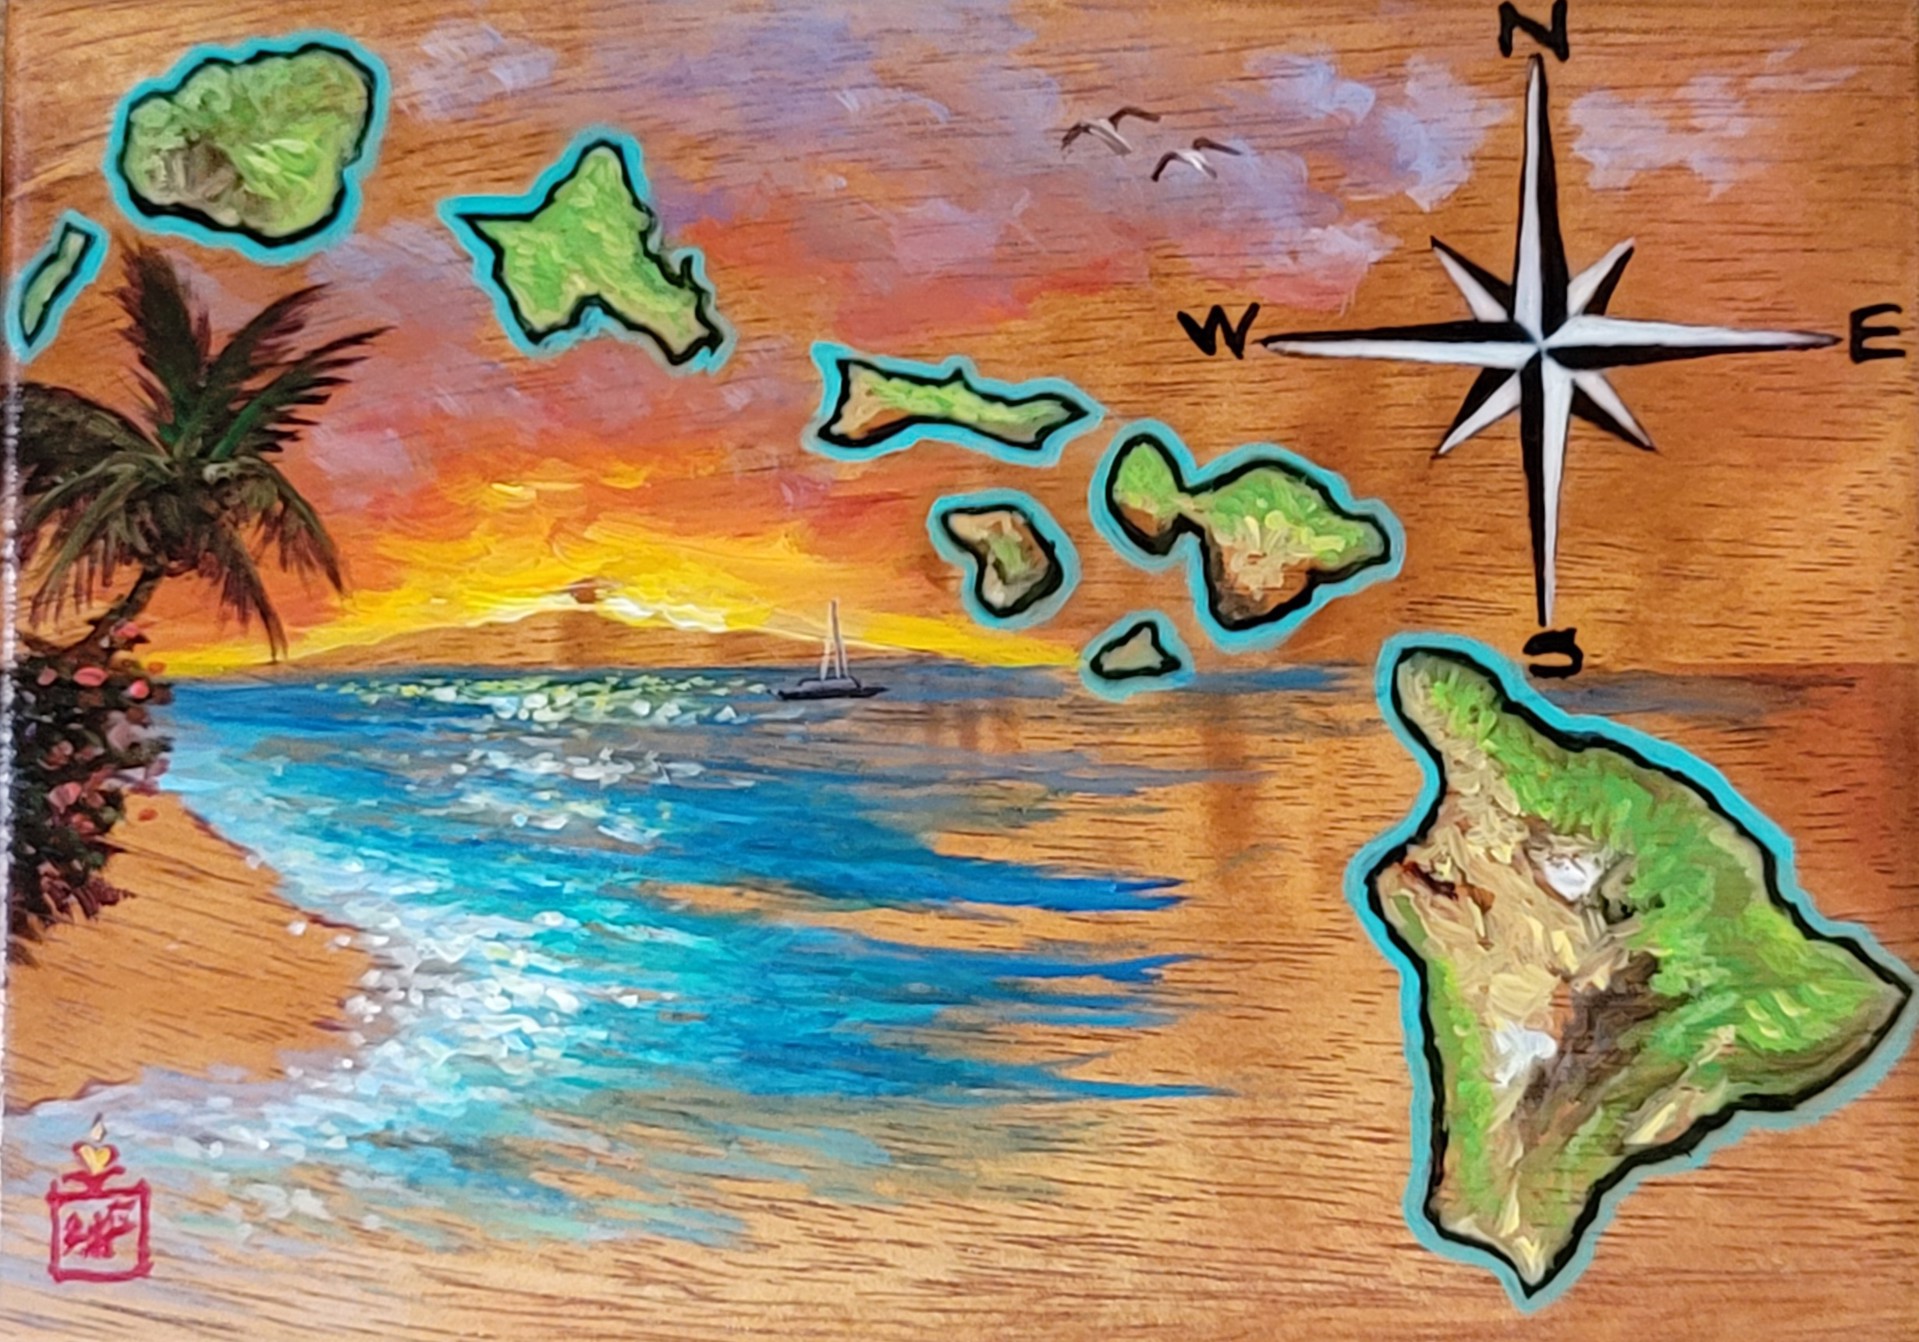 Destined for Aloha by Deen Garcia